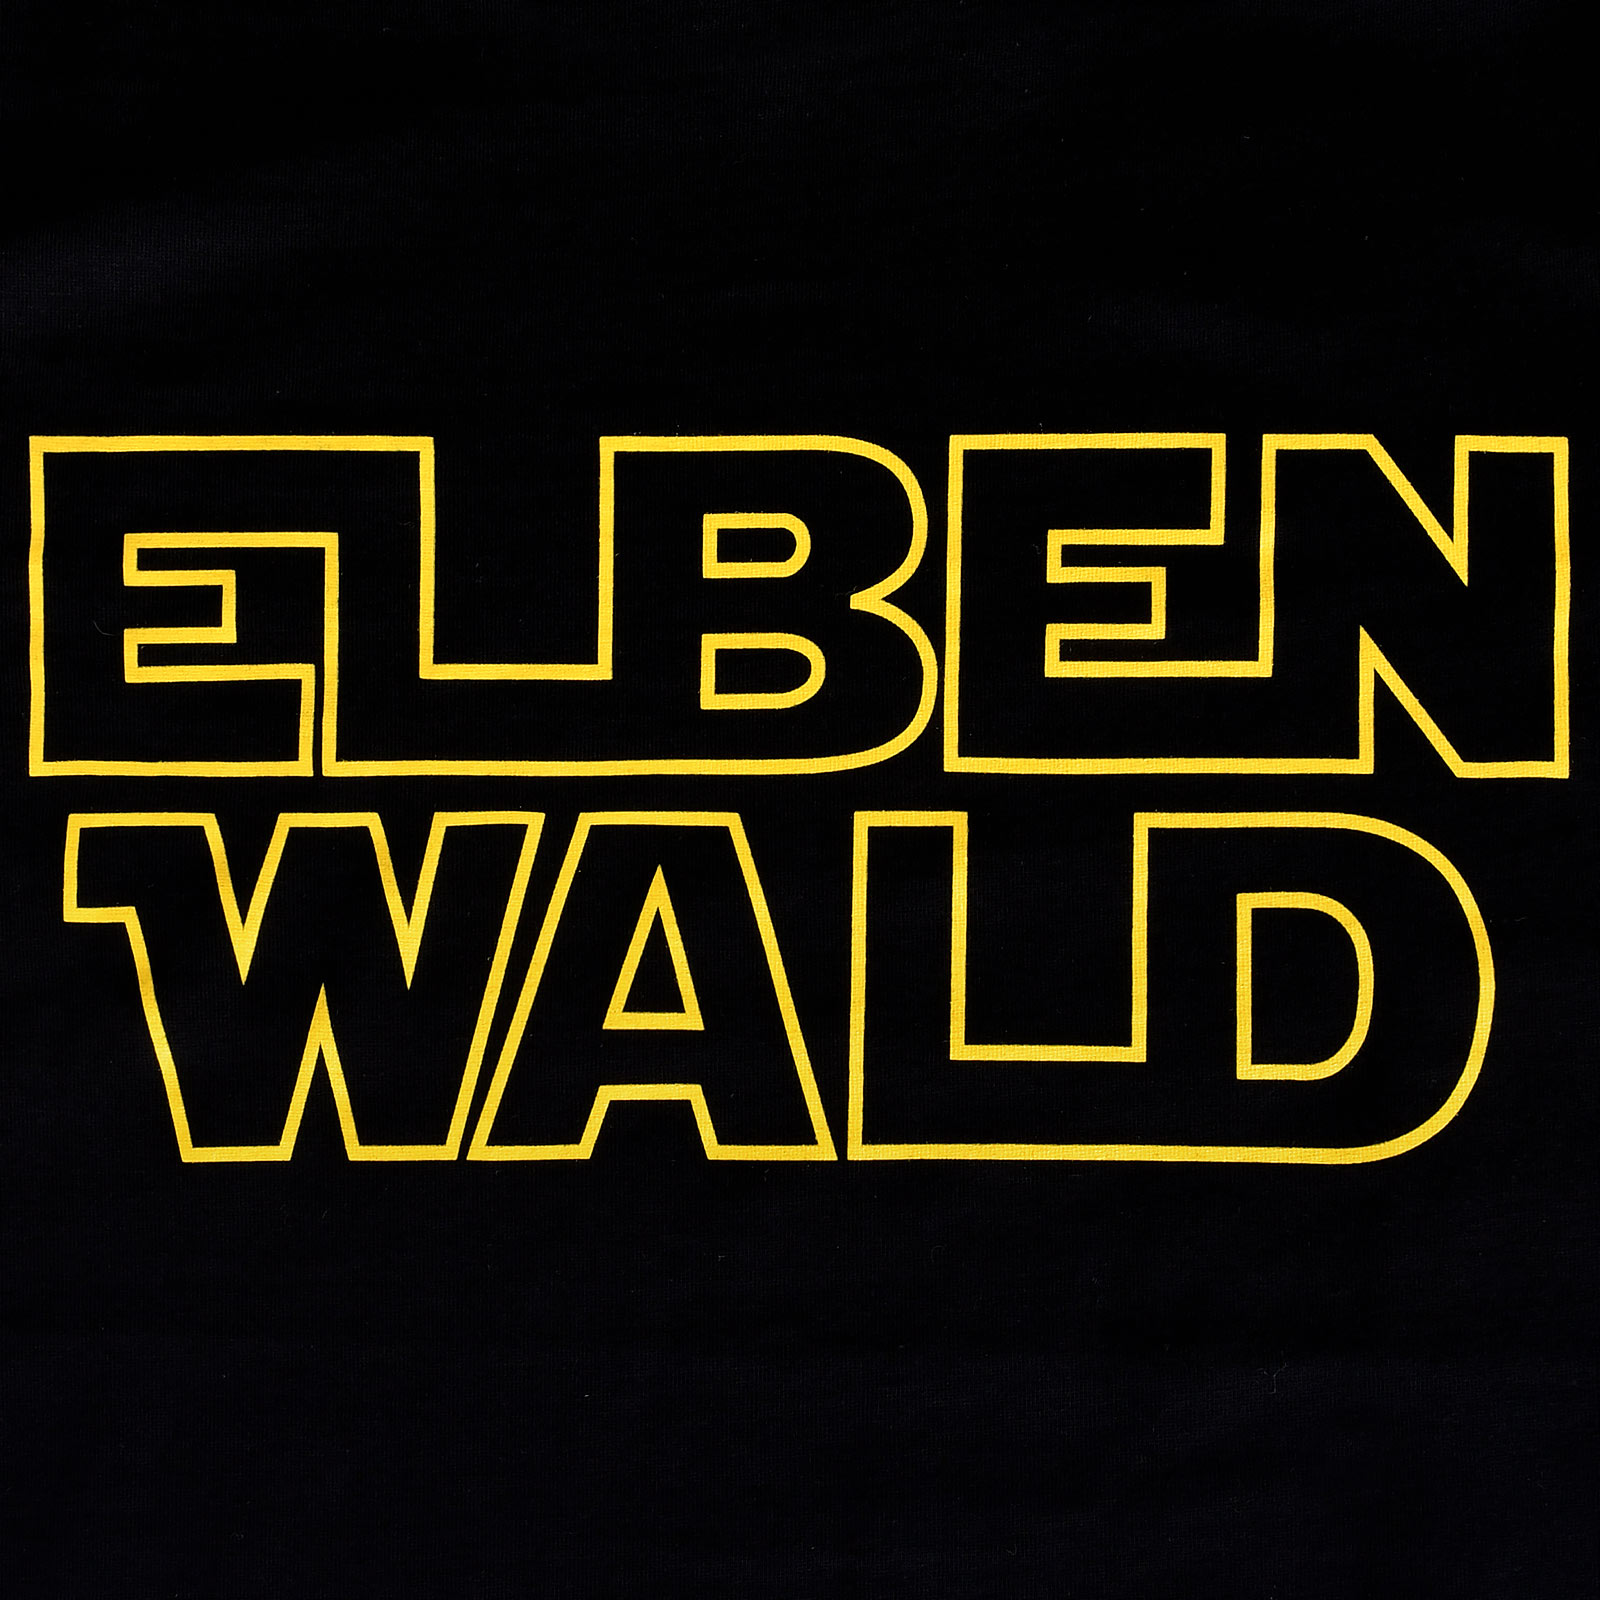 Elbenwald Logo T-Shirt for Star Wars Fans